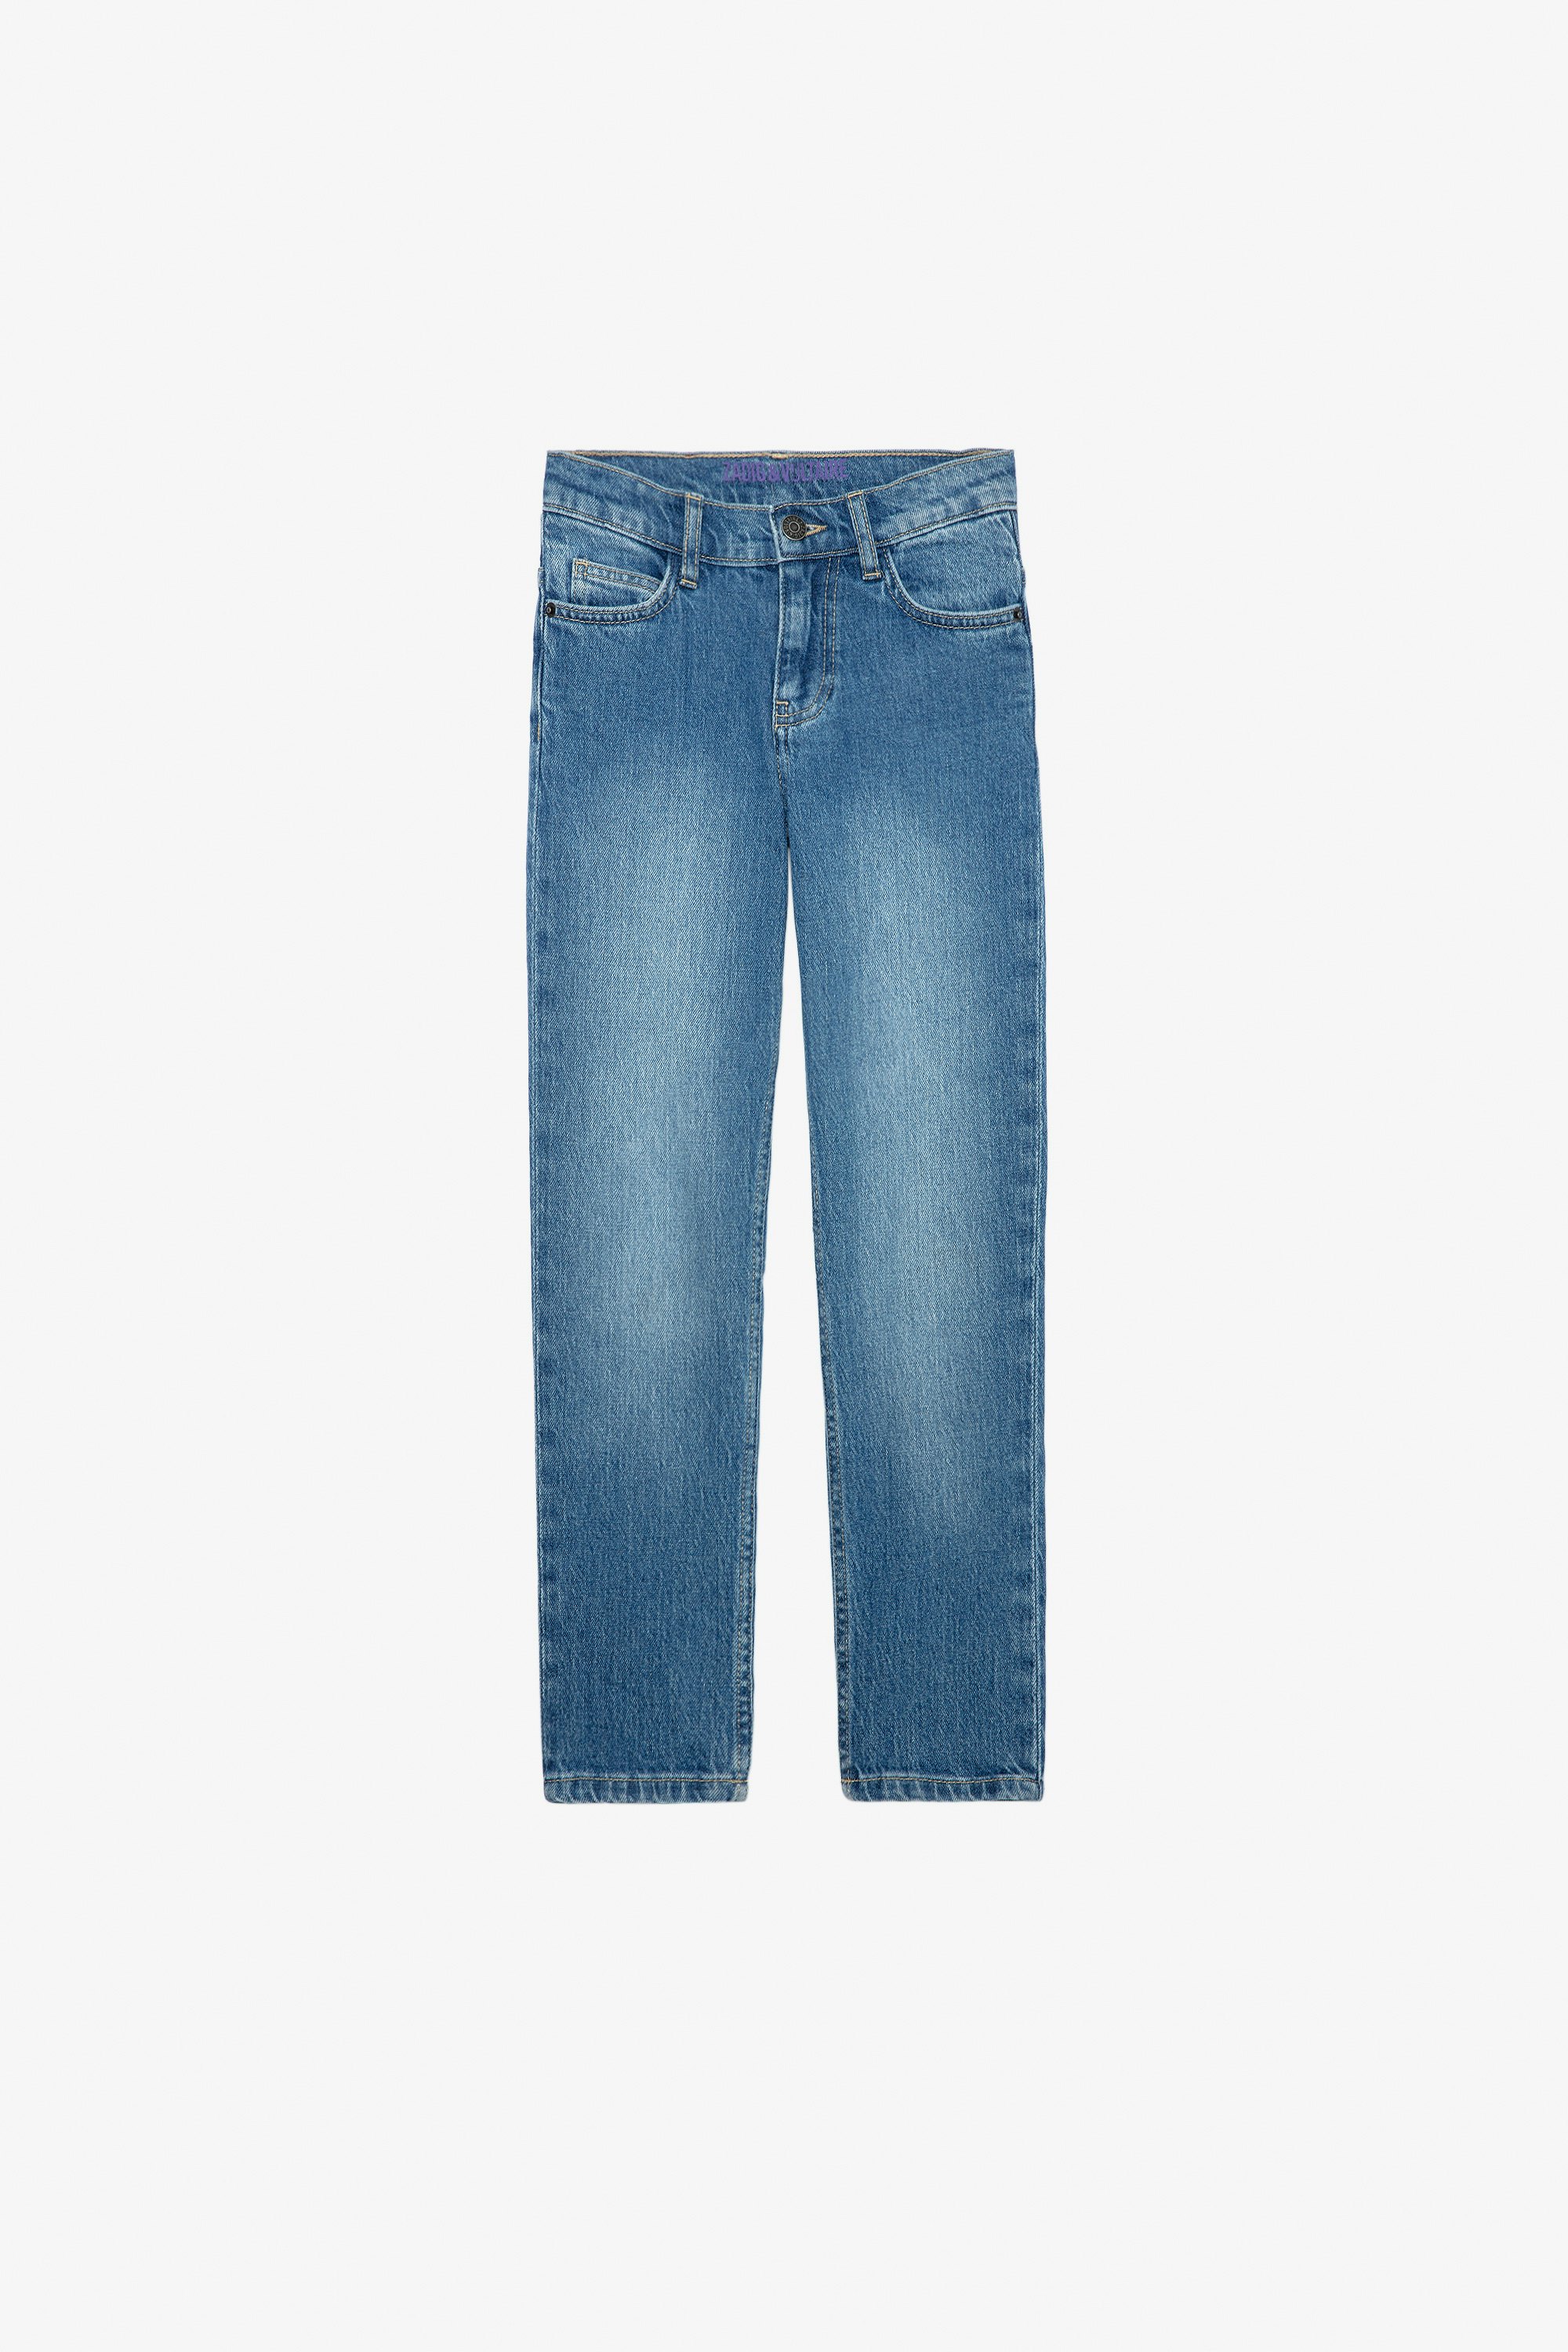 Boys’ Sean Jeans Boys’ straight leg faded blue denim jeans.